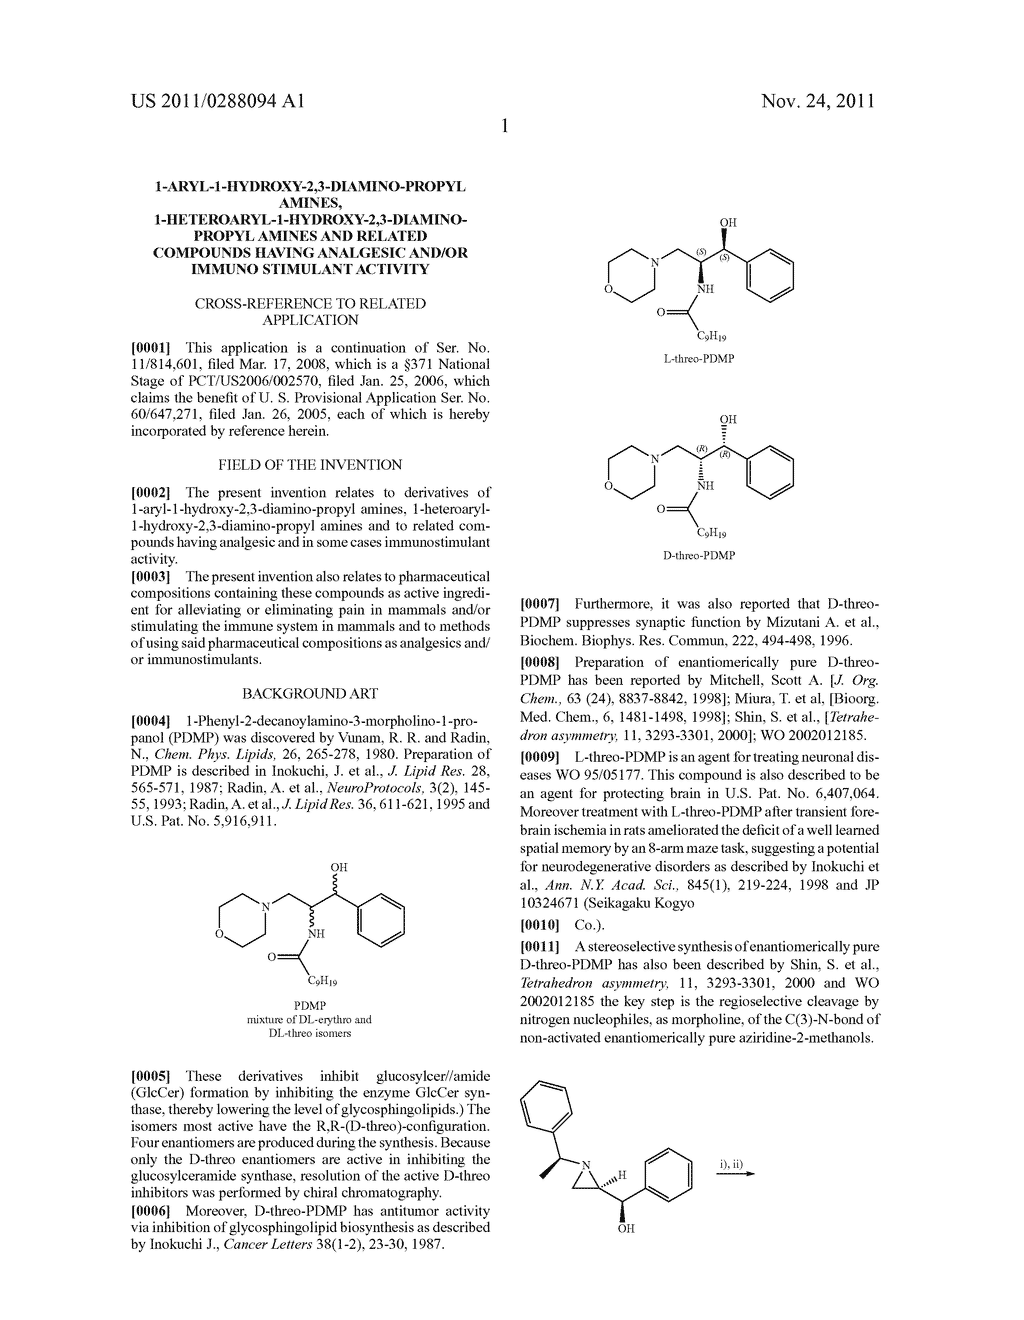 1-ARYL-1-HYDROXY-2,3-DIAMINO-PROPYL AMINES,     1-HETEROARYL-1-HYDROXY-2,3-DIAMINO-PROPYL AMINES AND RELATED COMPOUNDS     HAVING ANALGESIC AND/OR IMMUNO STIMULANT ACTIVITY - diagram, schematic, and image 02